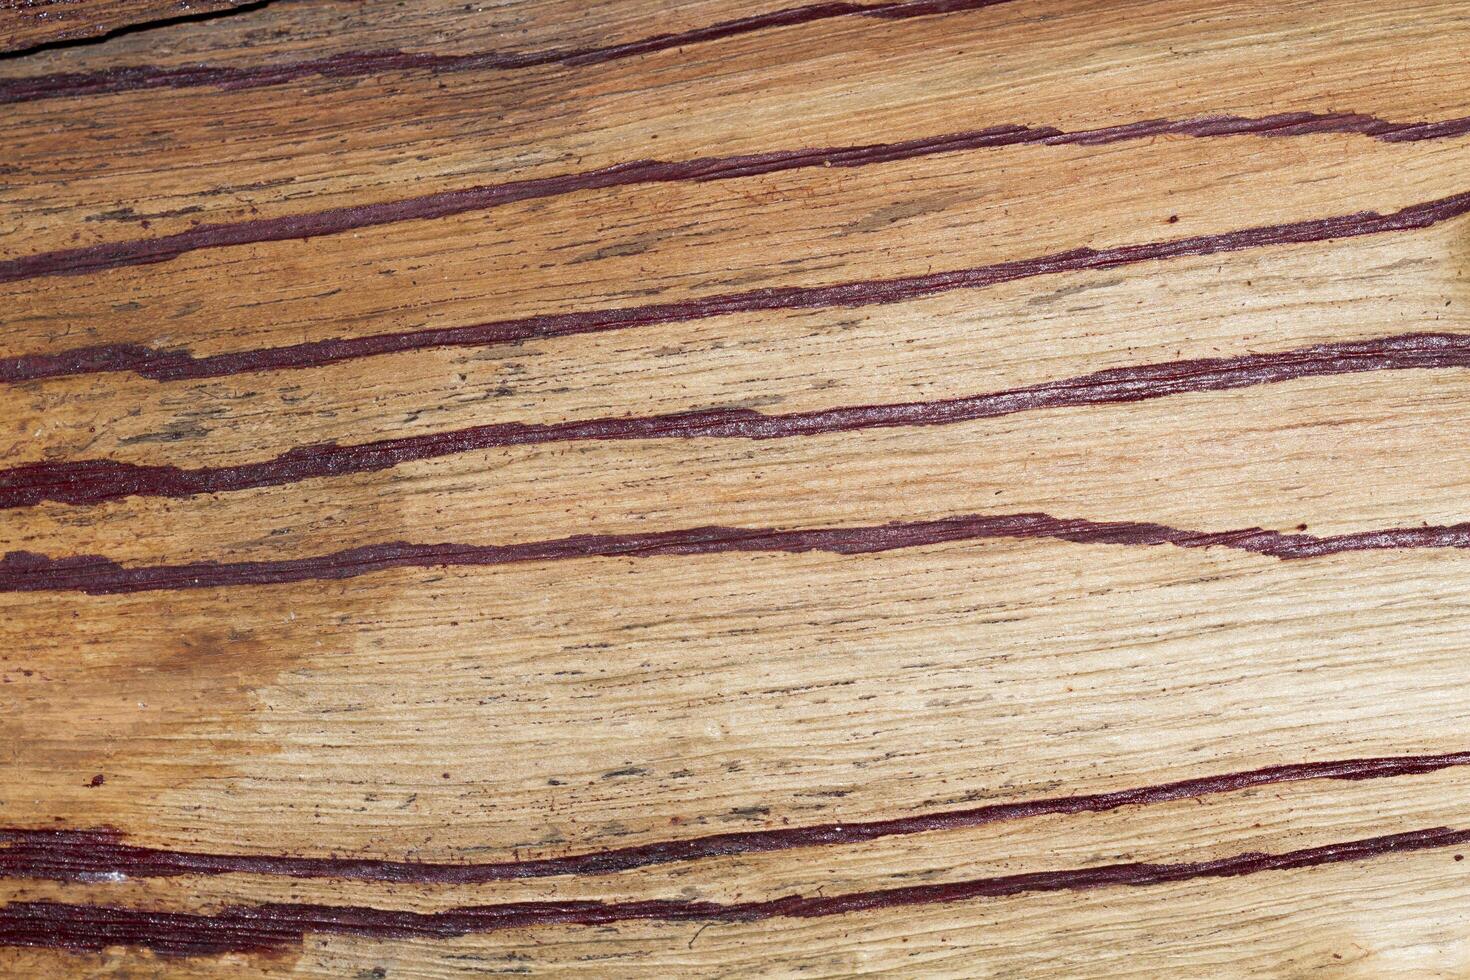 Wooden texture background photo